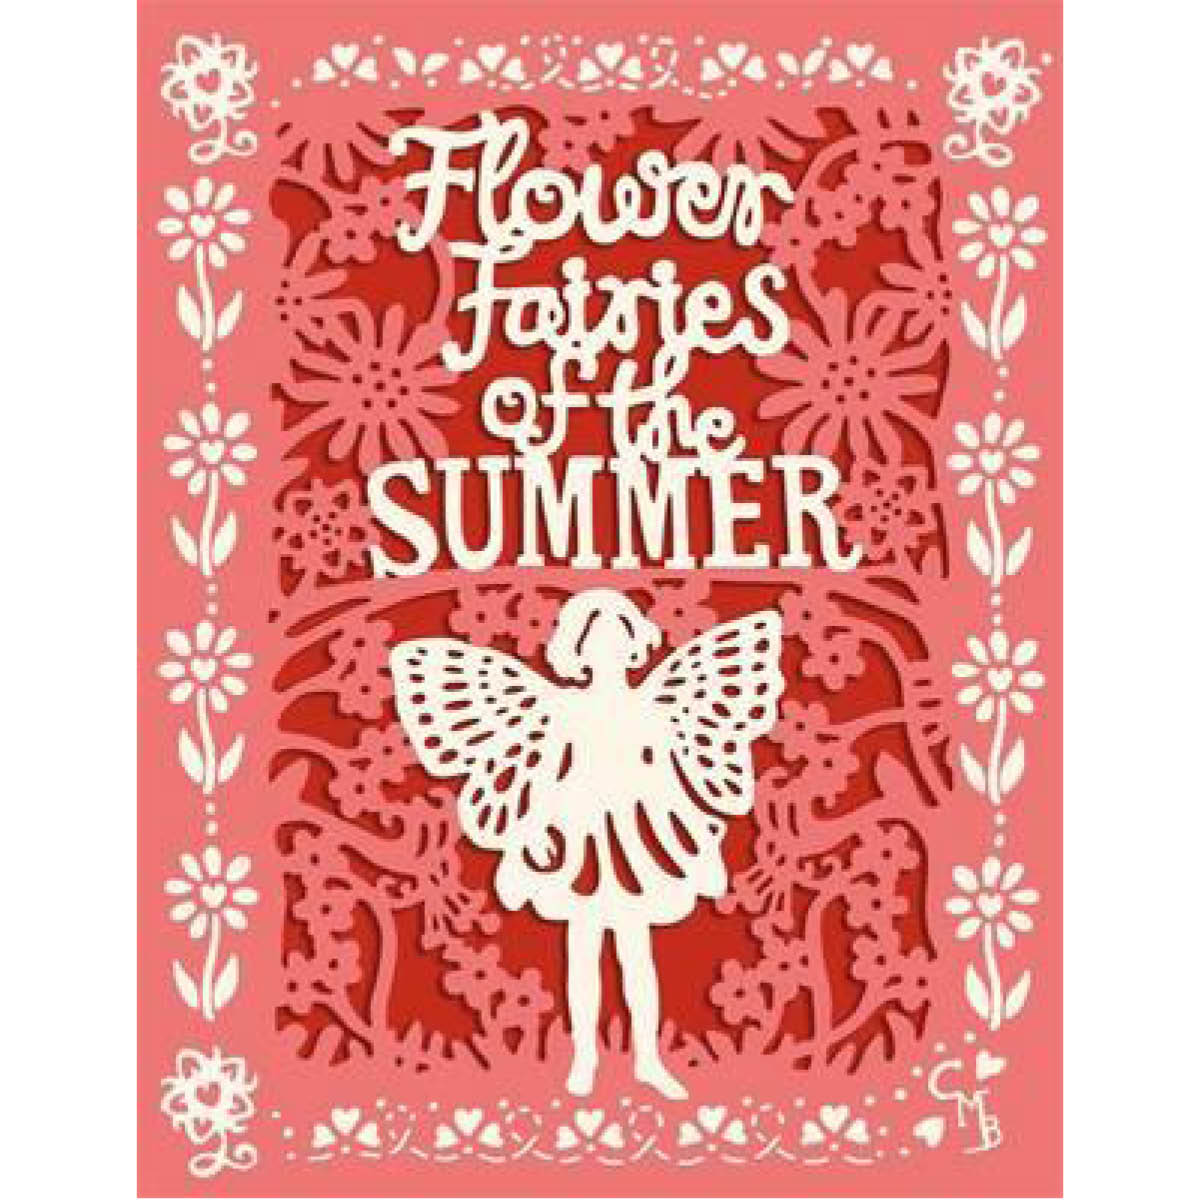 Flower Fairies Of The Summer Book